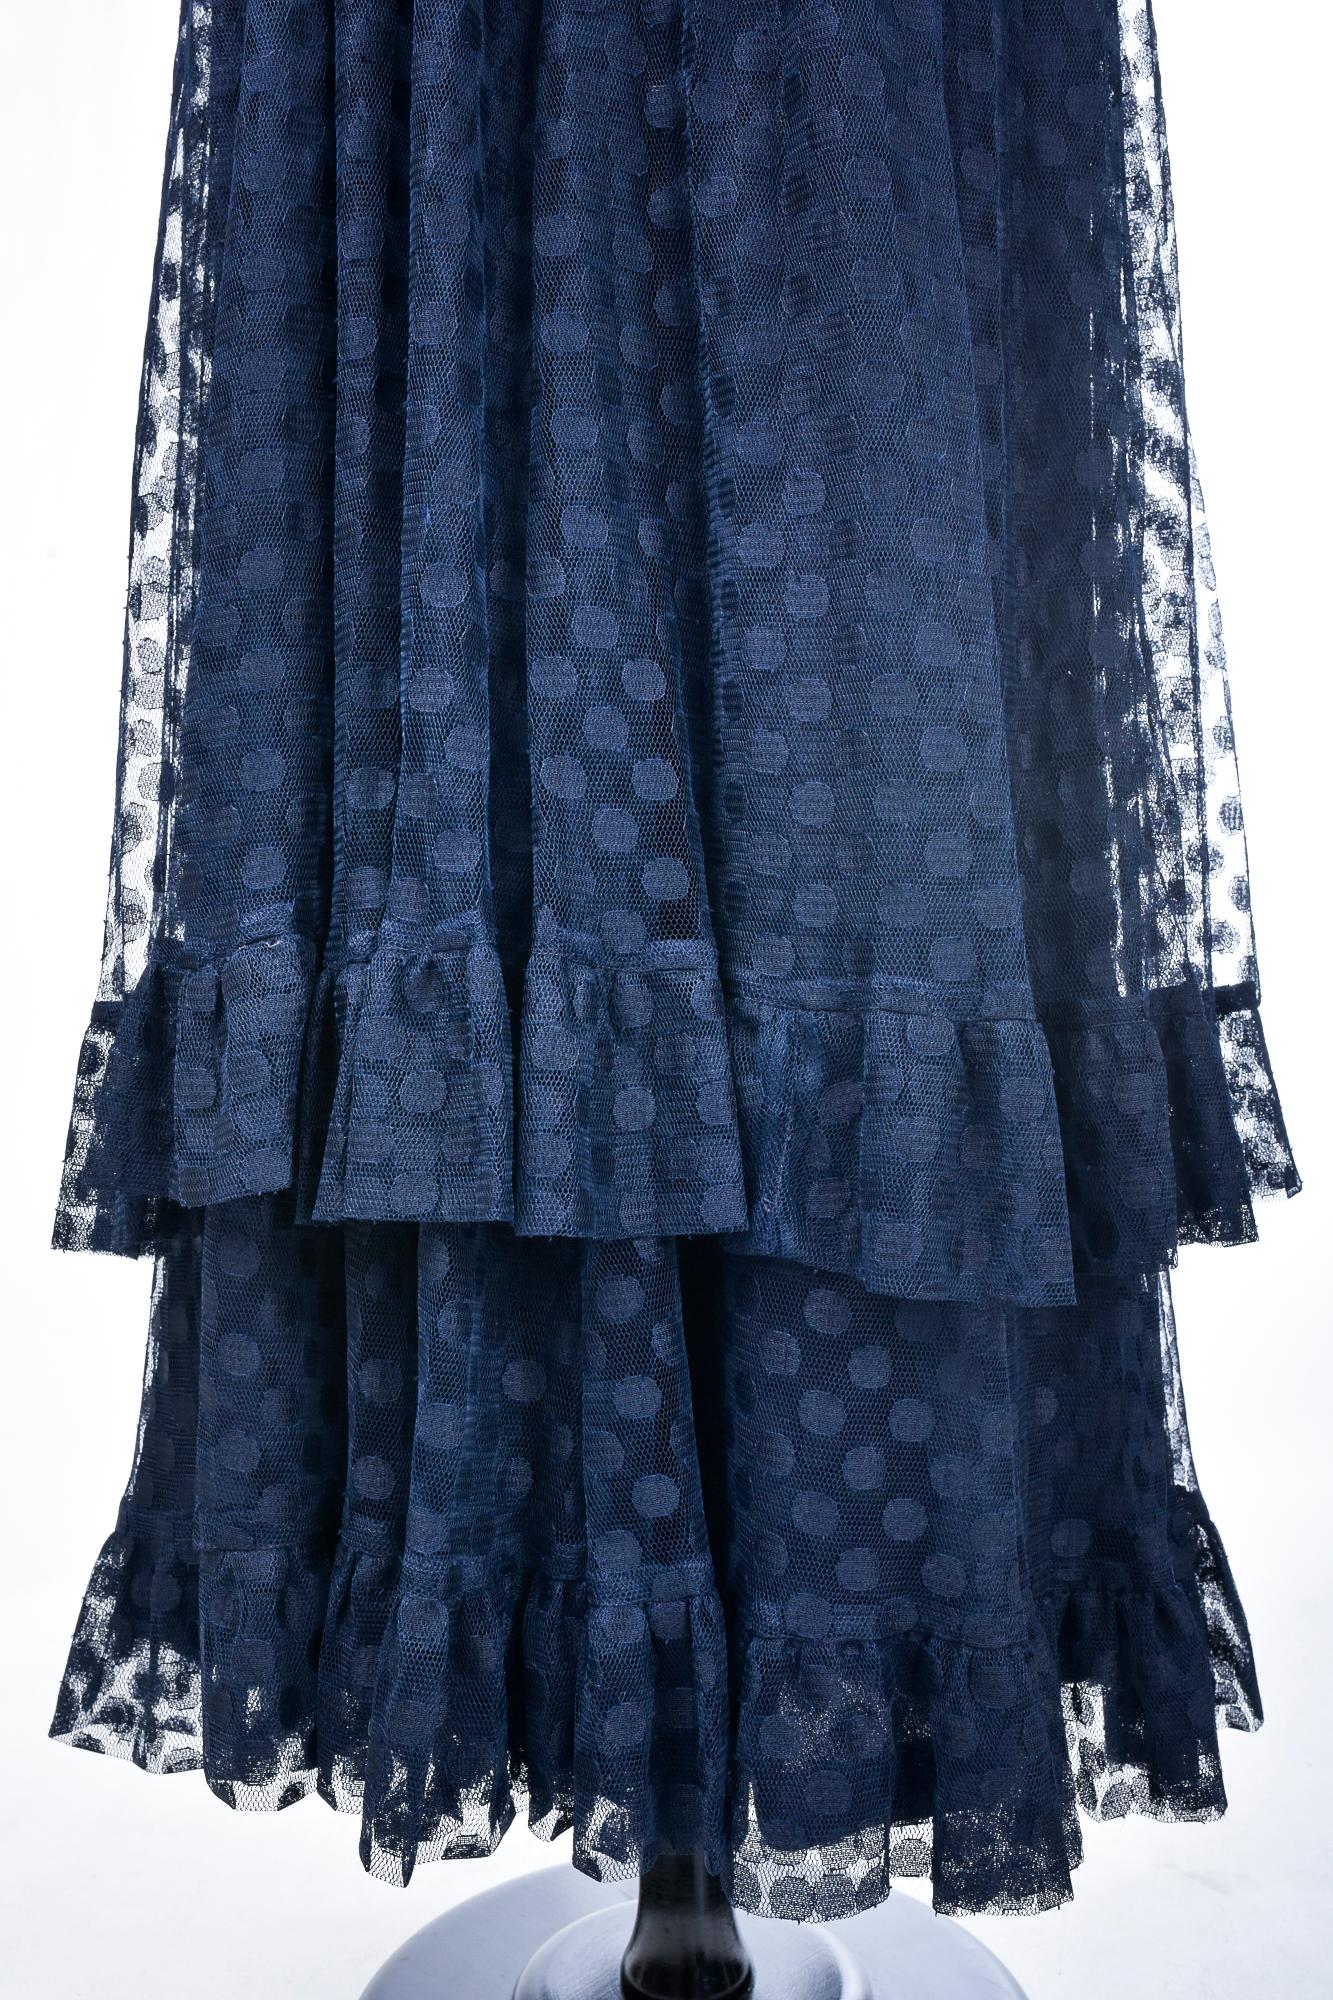 A Jean-Louis Sherrer Evening  Dress in Navy Polka dots Net Circa 1980 For Sale 2